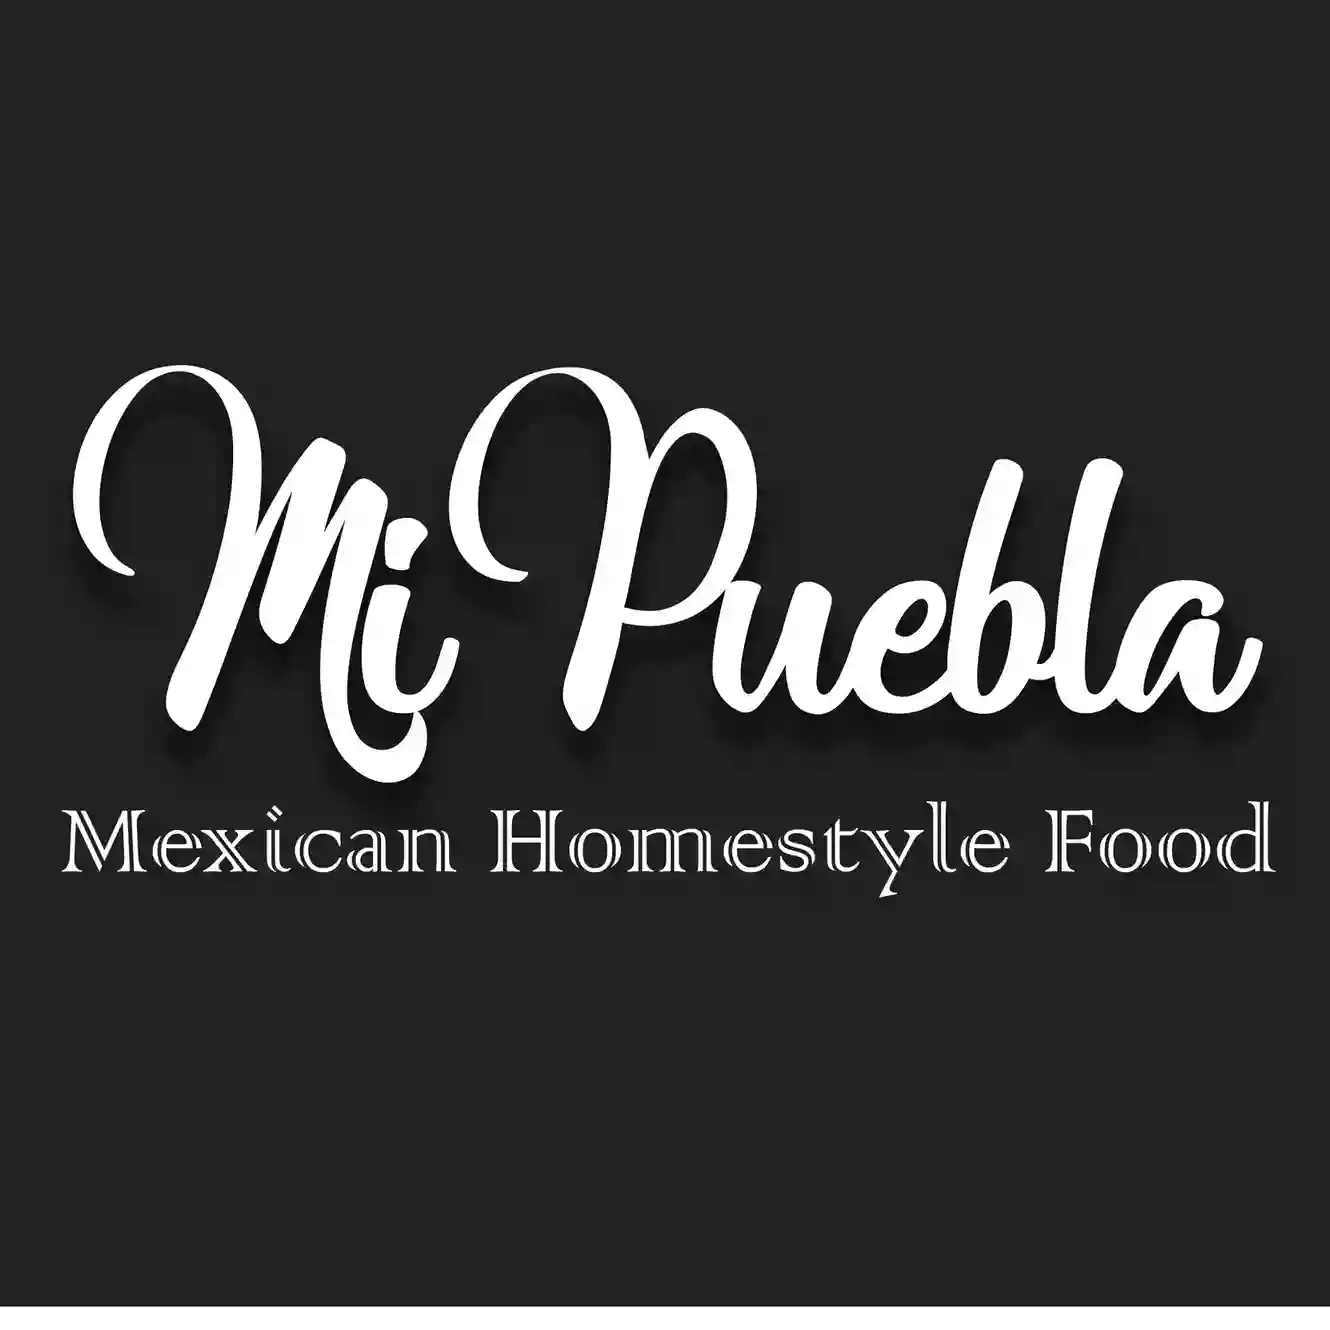 Mi Puebla Restaurant